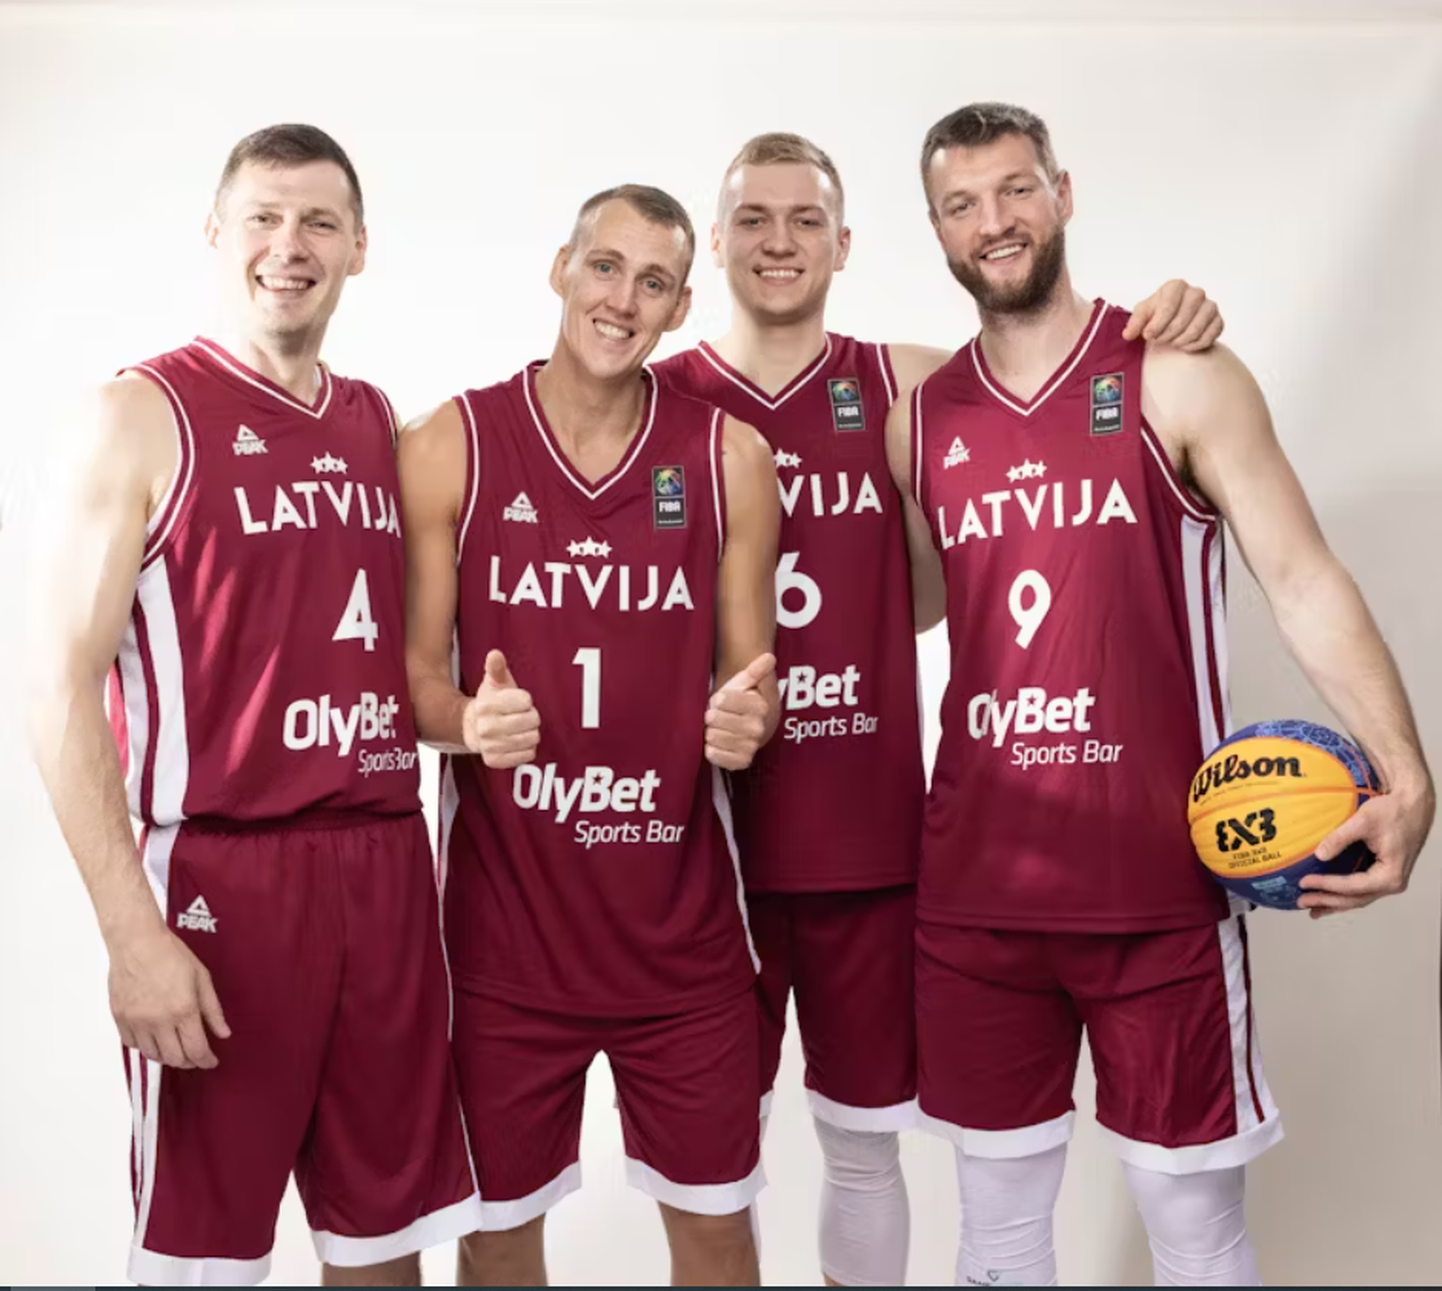 Сборная Латвии по баскетболу 3x3: Агнис Чаварс, Наурис Миезис, Францис Лацис и Зигмарс Раймо